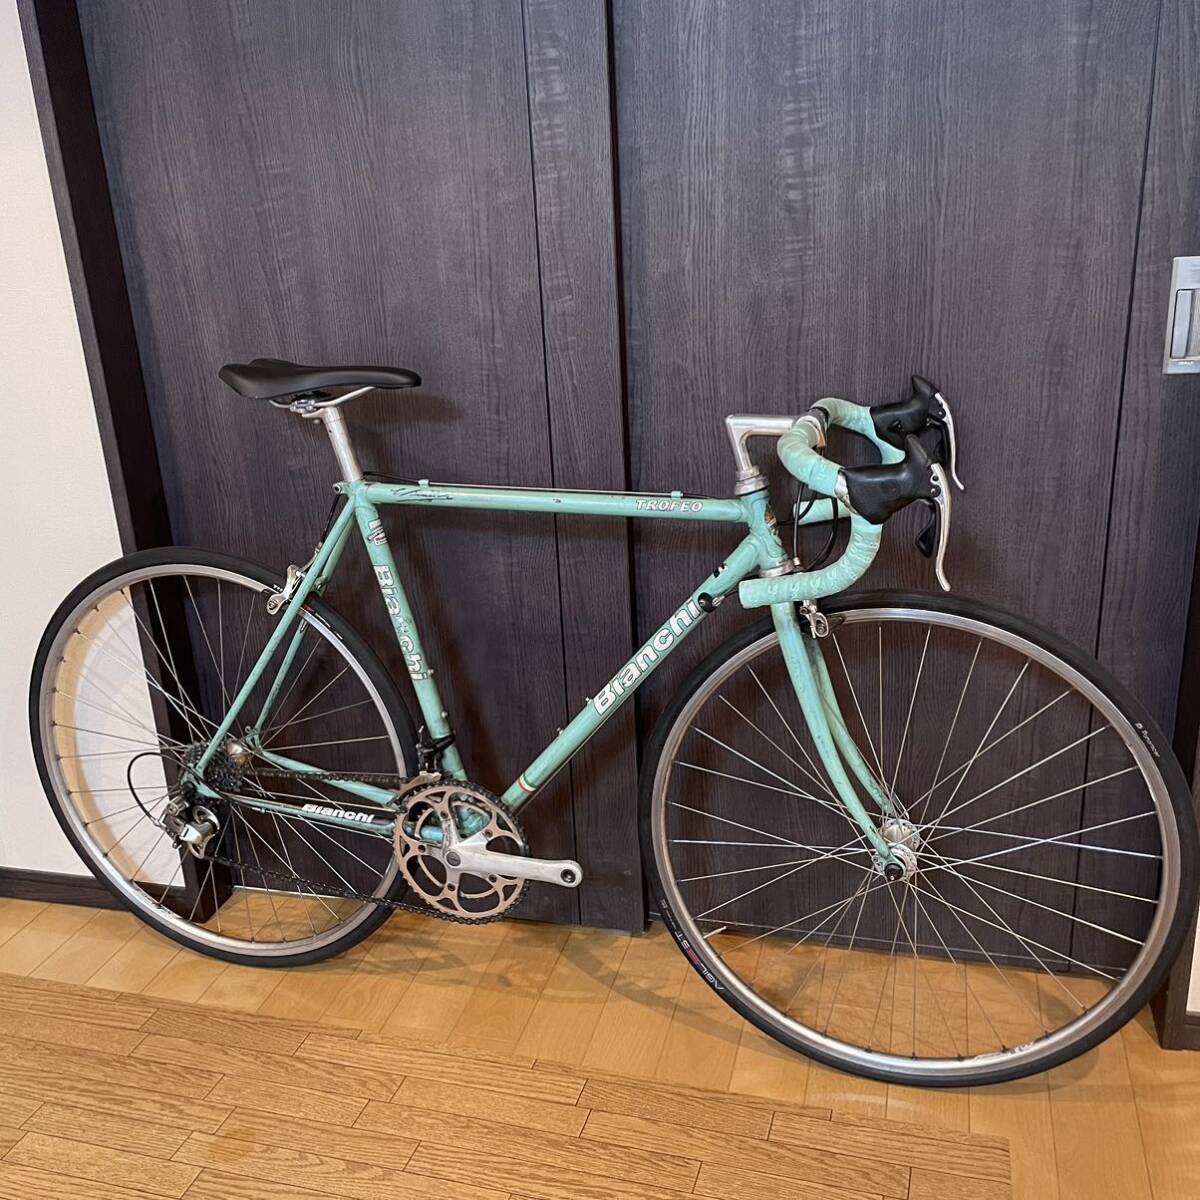 Bianchi TROFEObi Anne ki Vintage road bike size 53 Kuromori frame Campagnolo Mirage Campagnolo MIRAGE